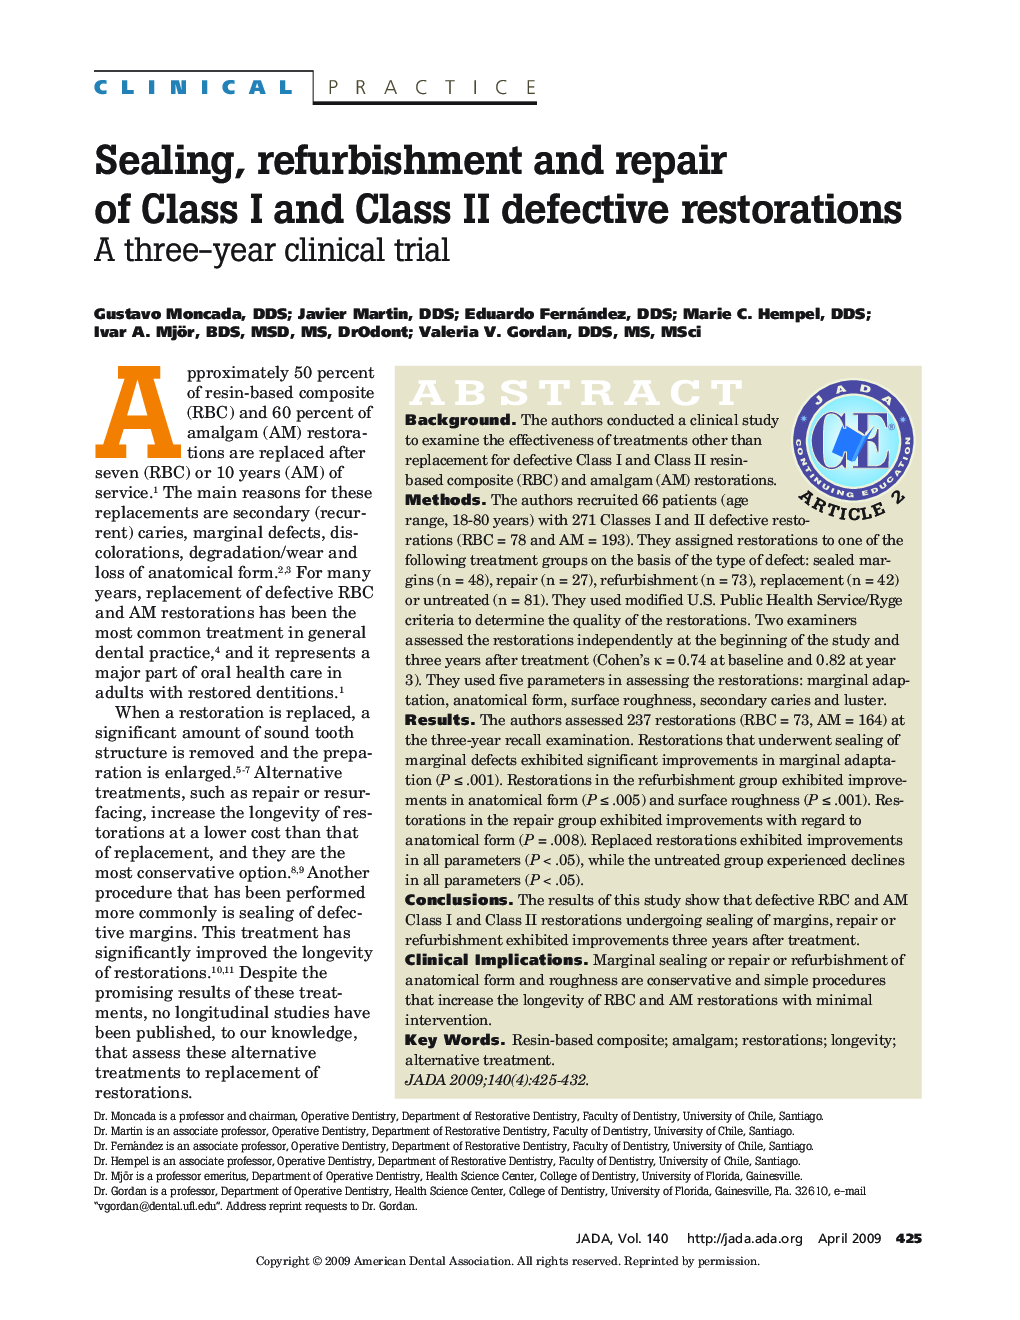 Sealing, Refurbishment and Repair of Class I and Class II Defective Restorations